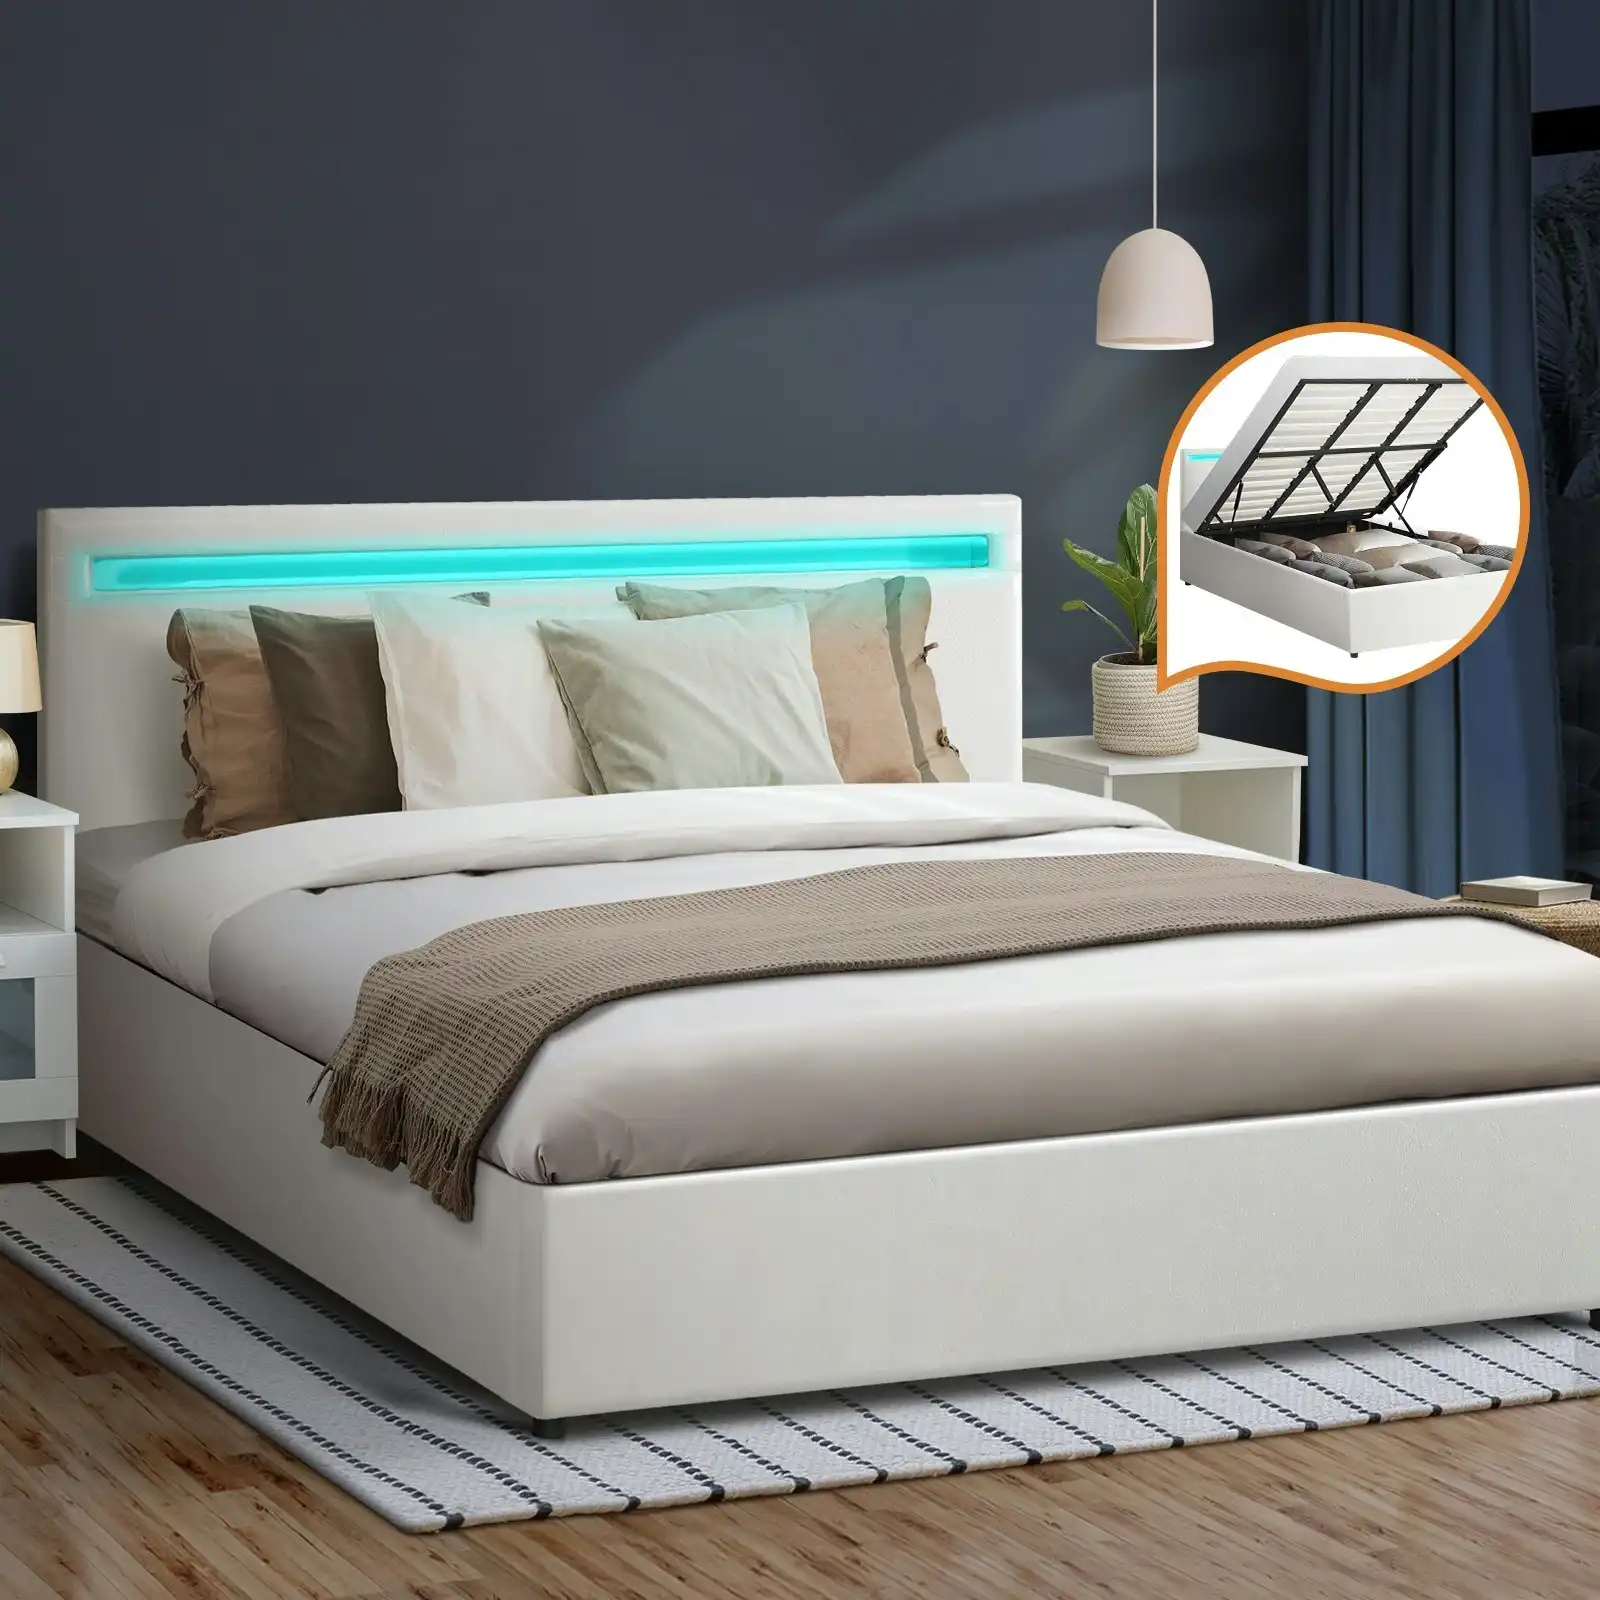 Oikiture Bed Frame King Size RGB LED Gas Lift Storage Base White